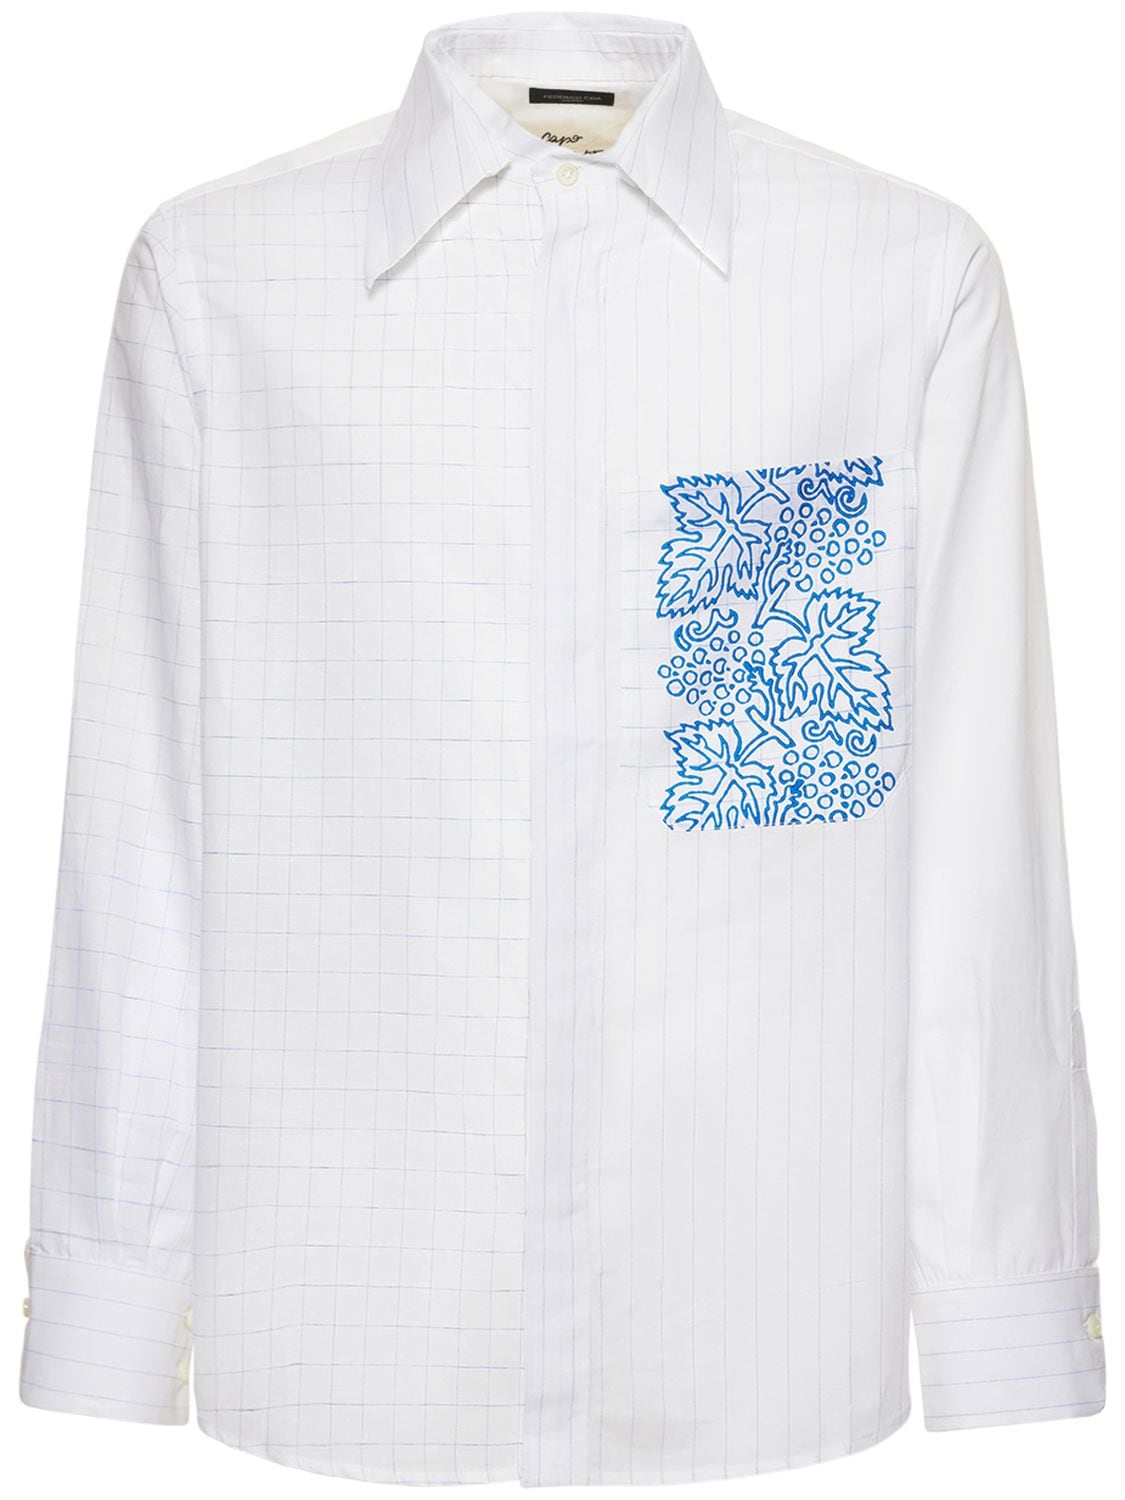 FEDERICO CINA Grapes Print Cotton & Linen Shirt